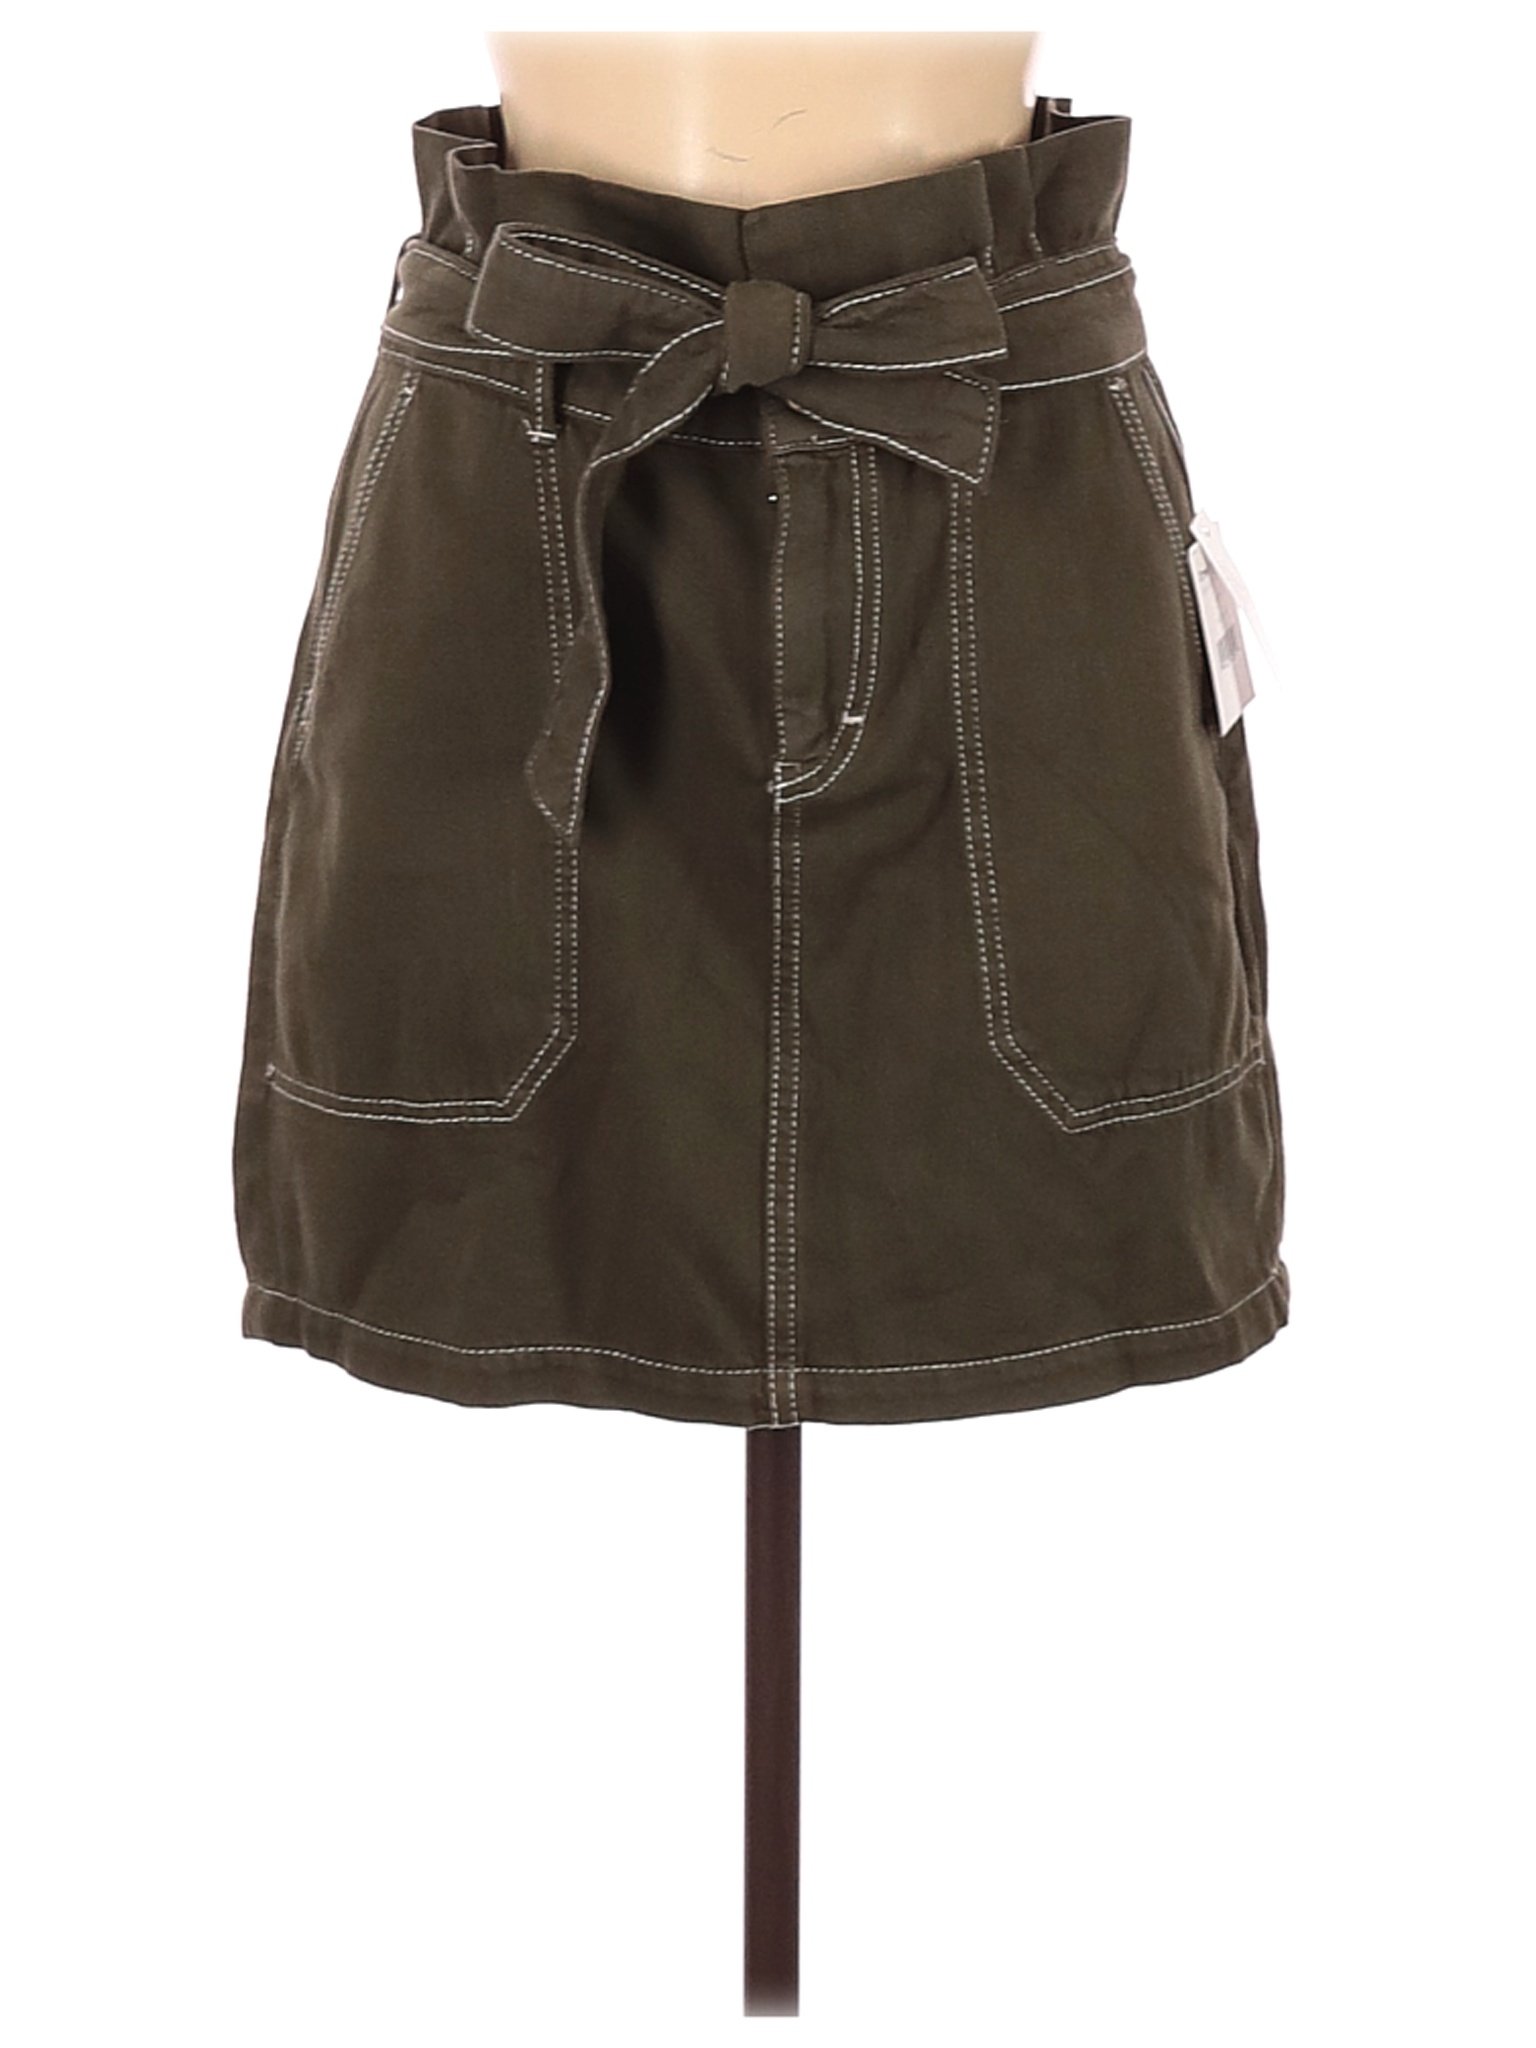 NWT Free People Women Green Casual Skirt 6 | eBay